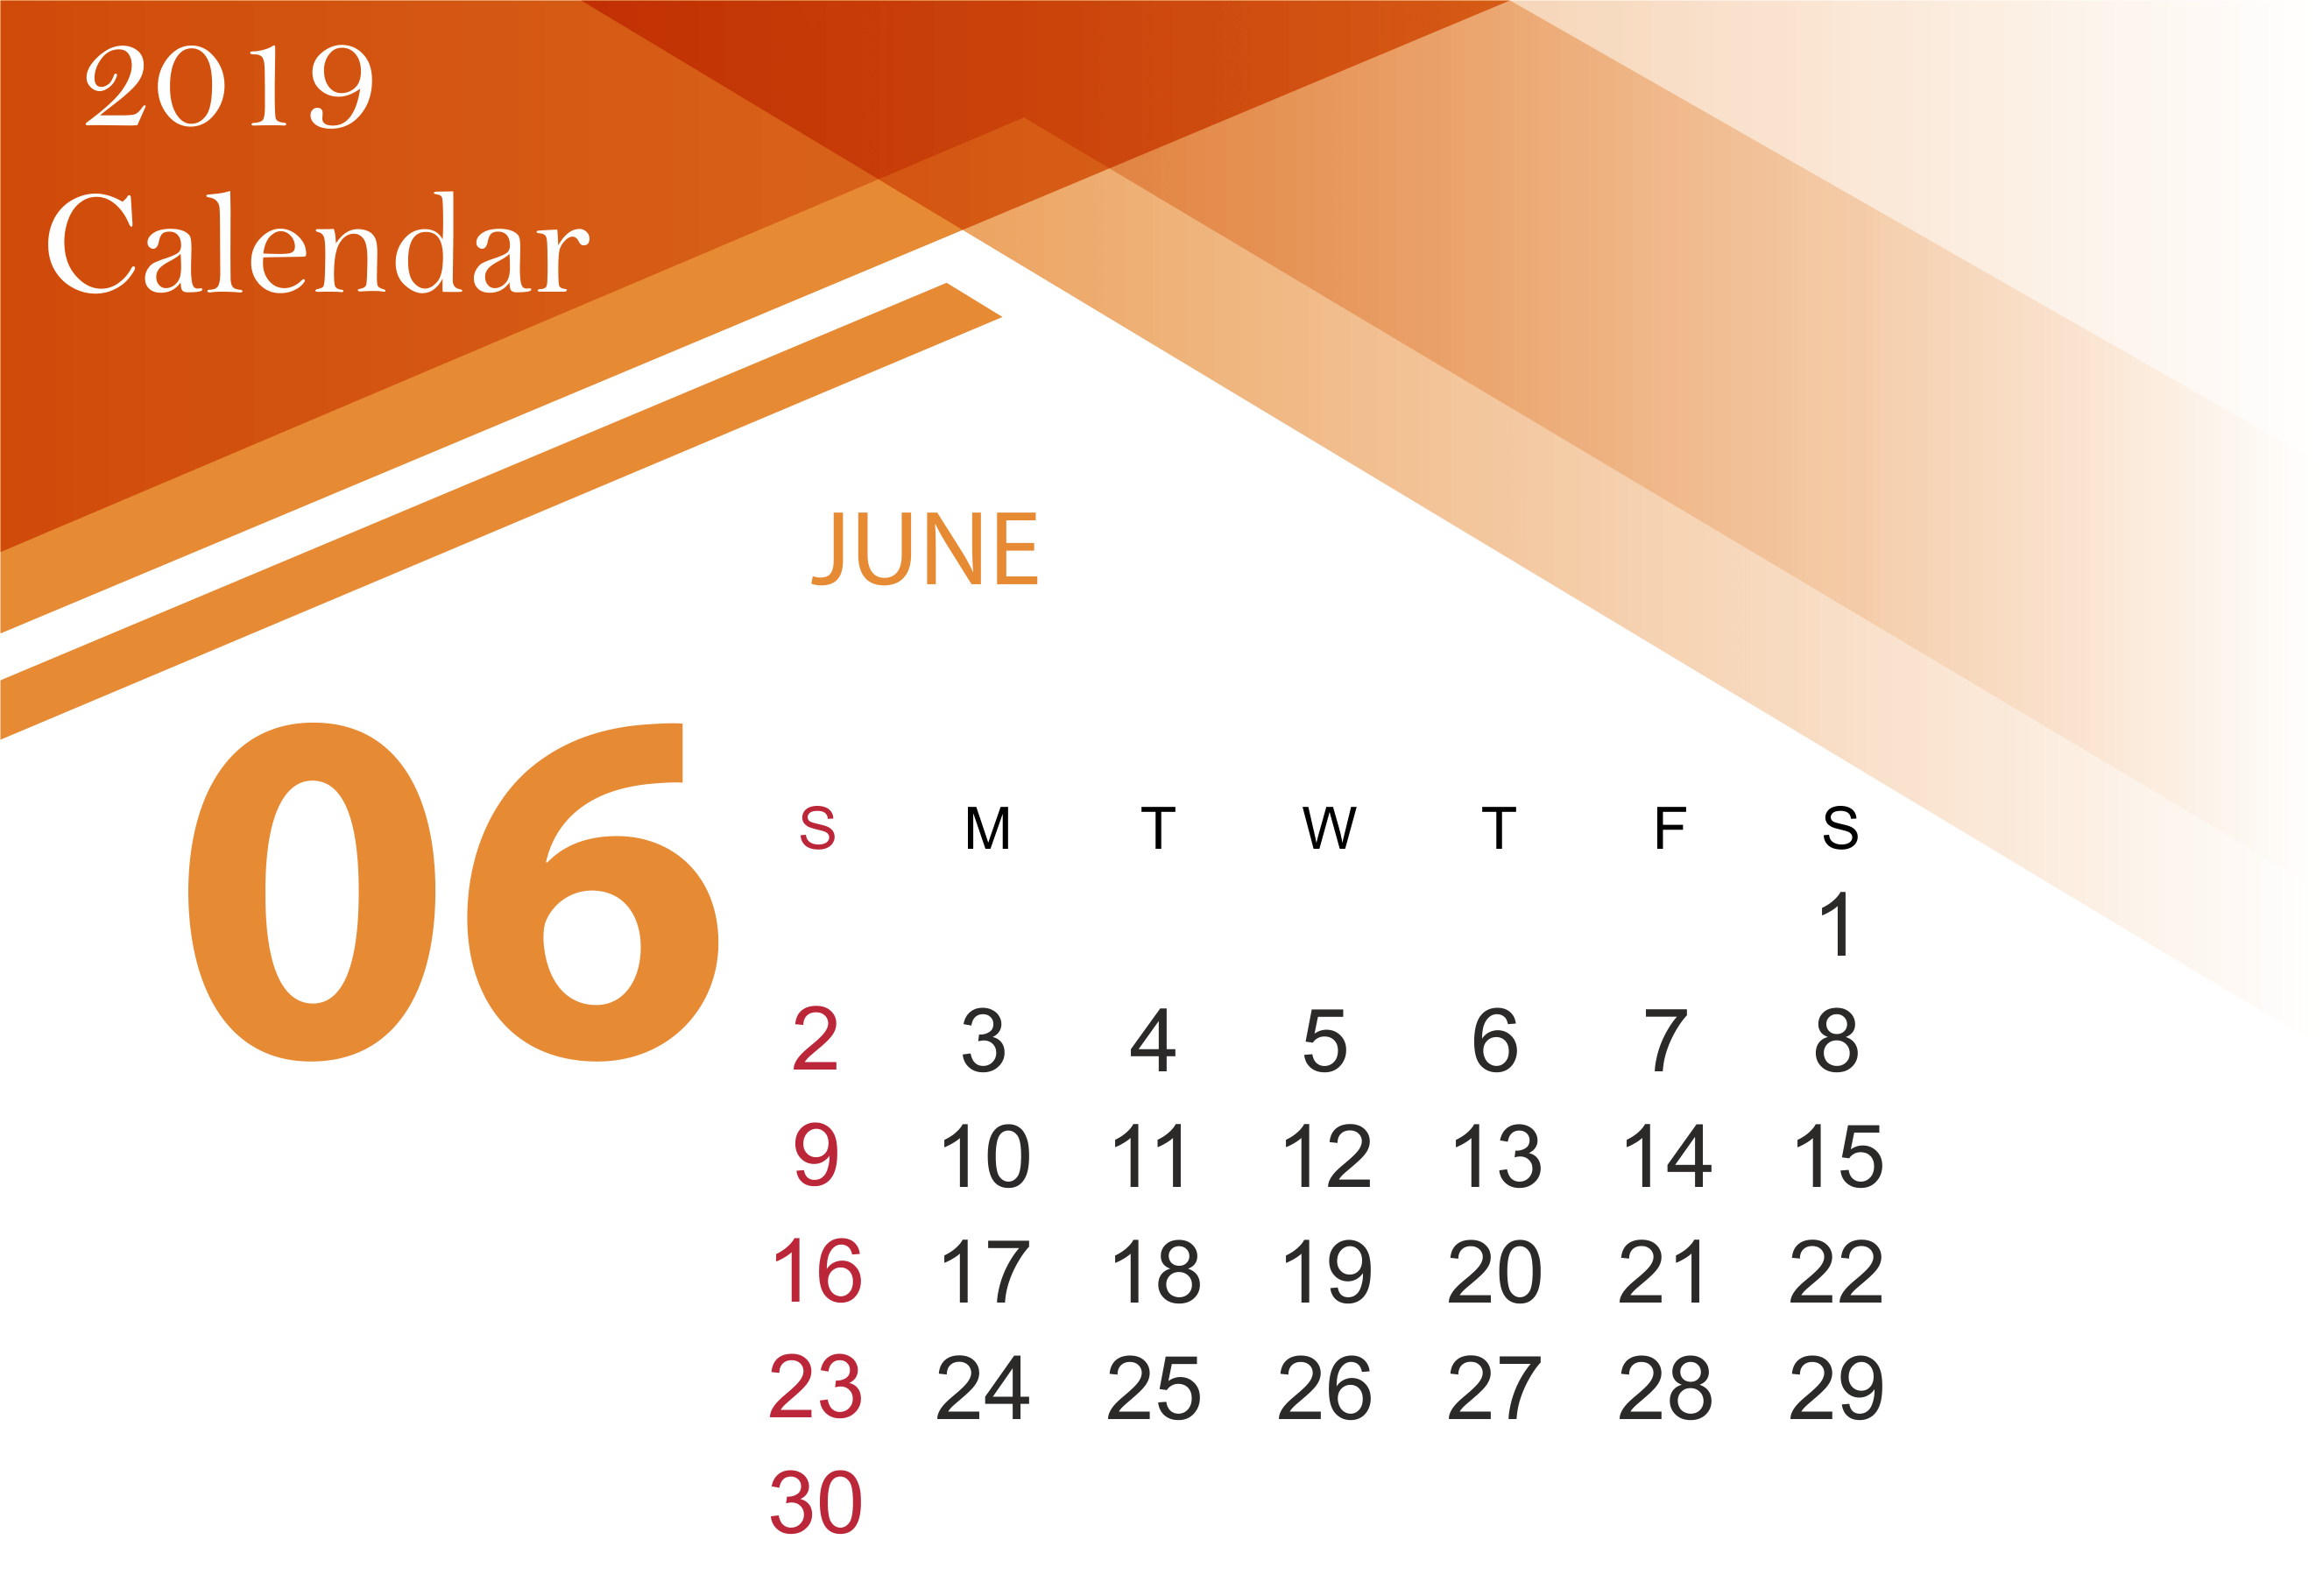 June 2019 Calendar Printable with Holidays